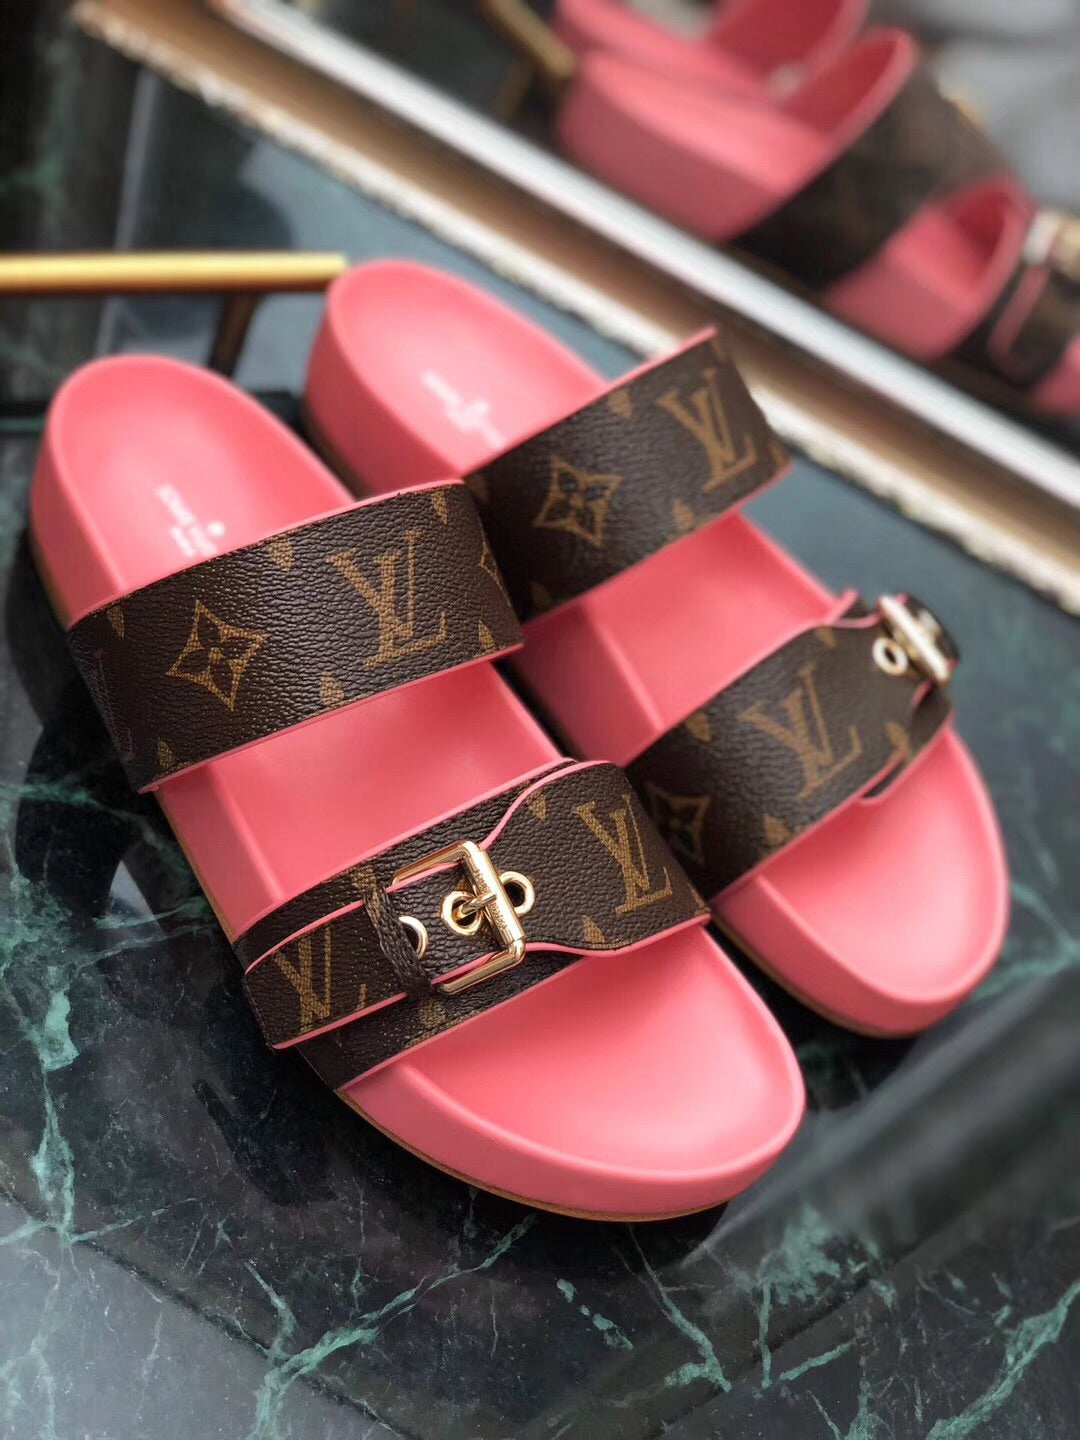 lv sandals pink